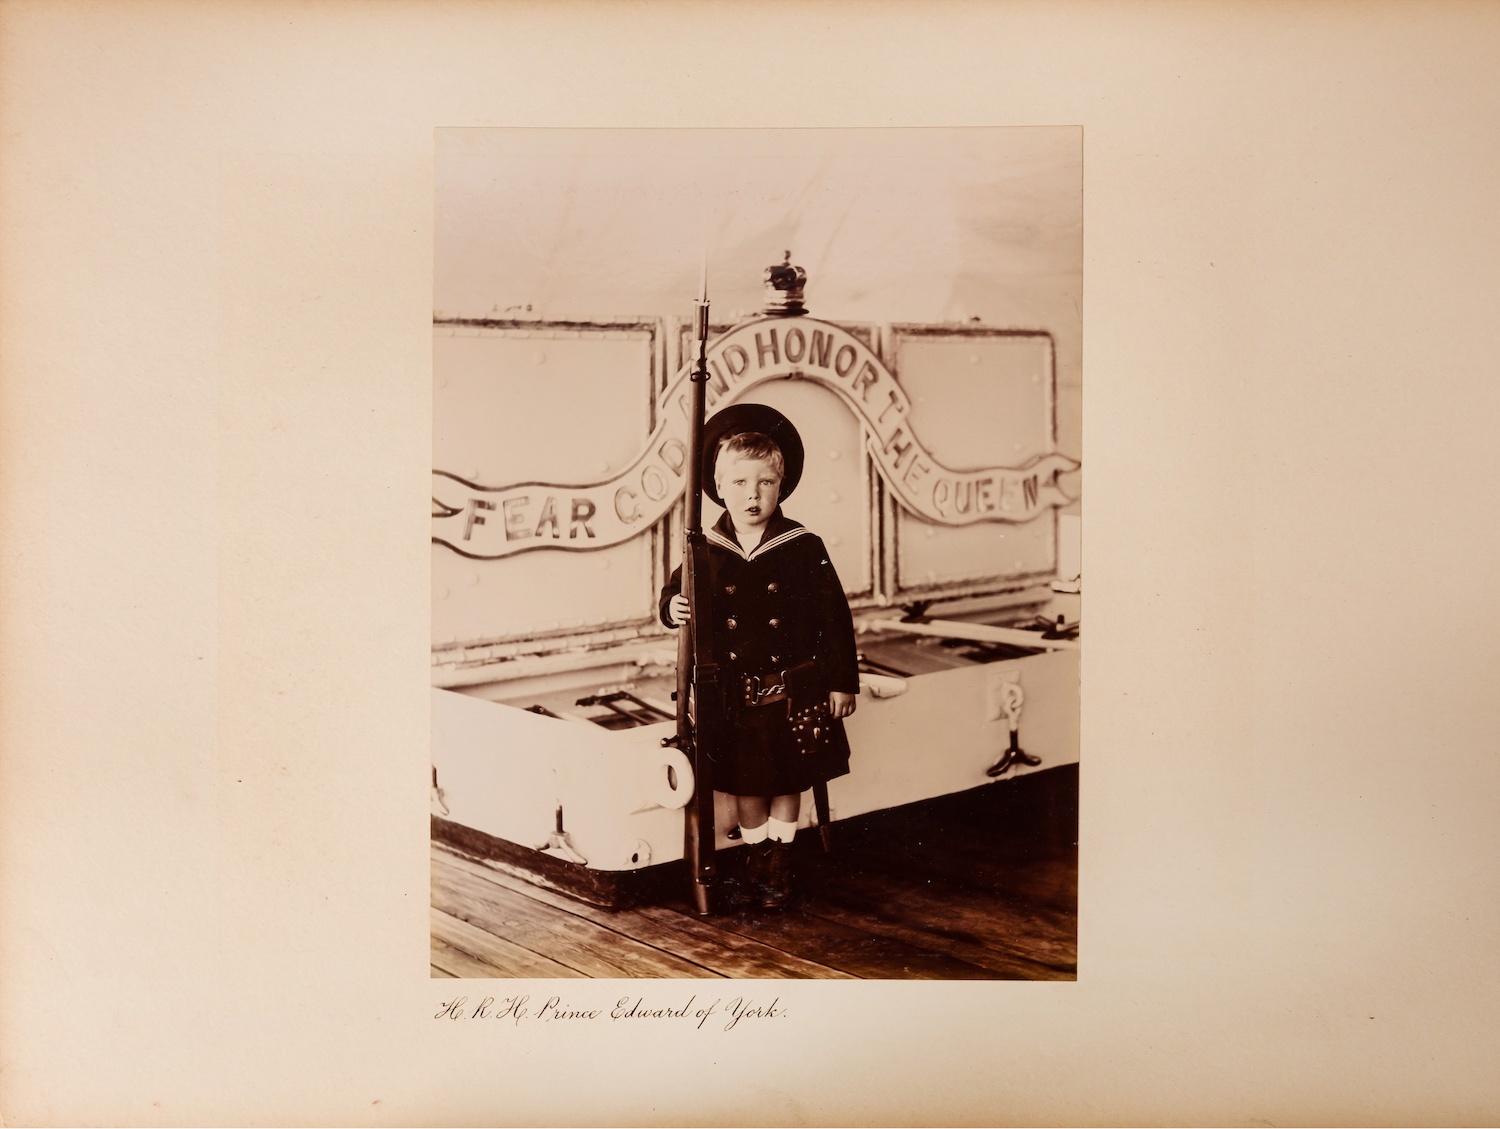 Photo from Duke of York's naval tour album